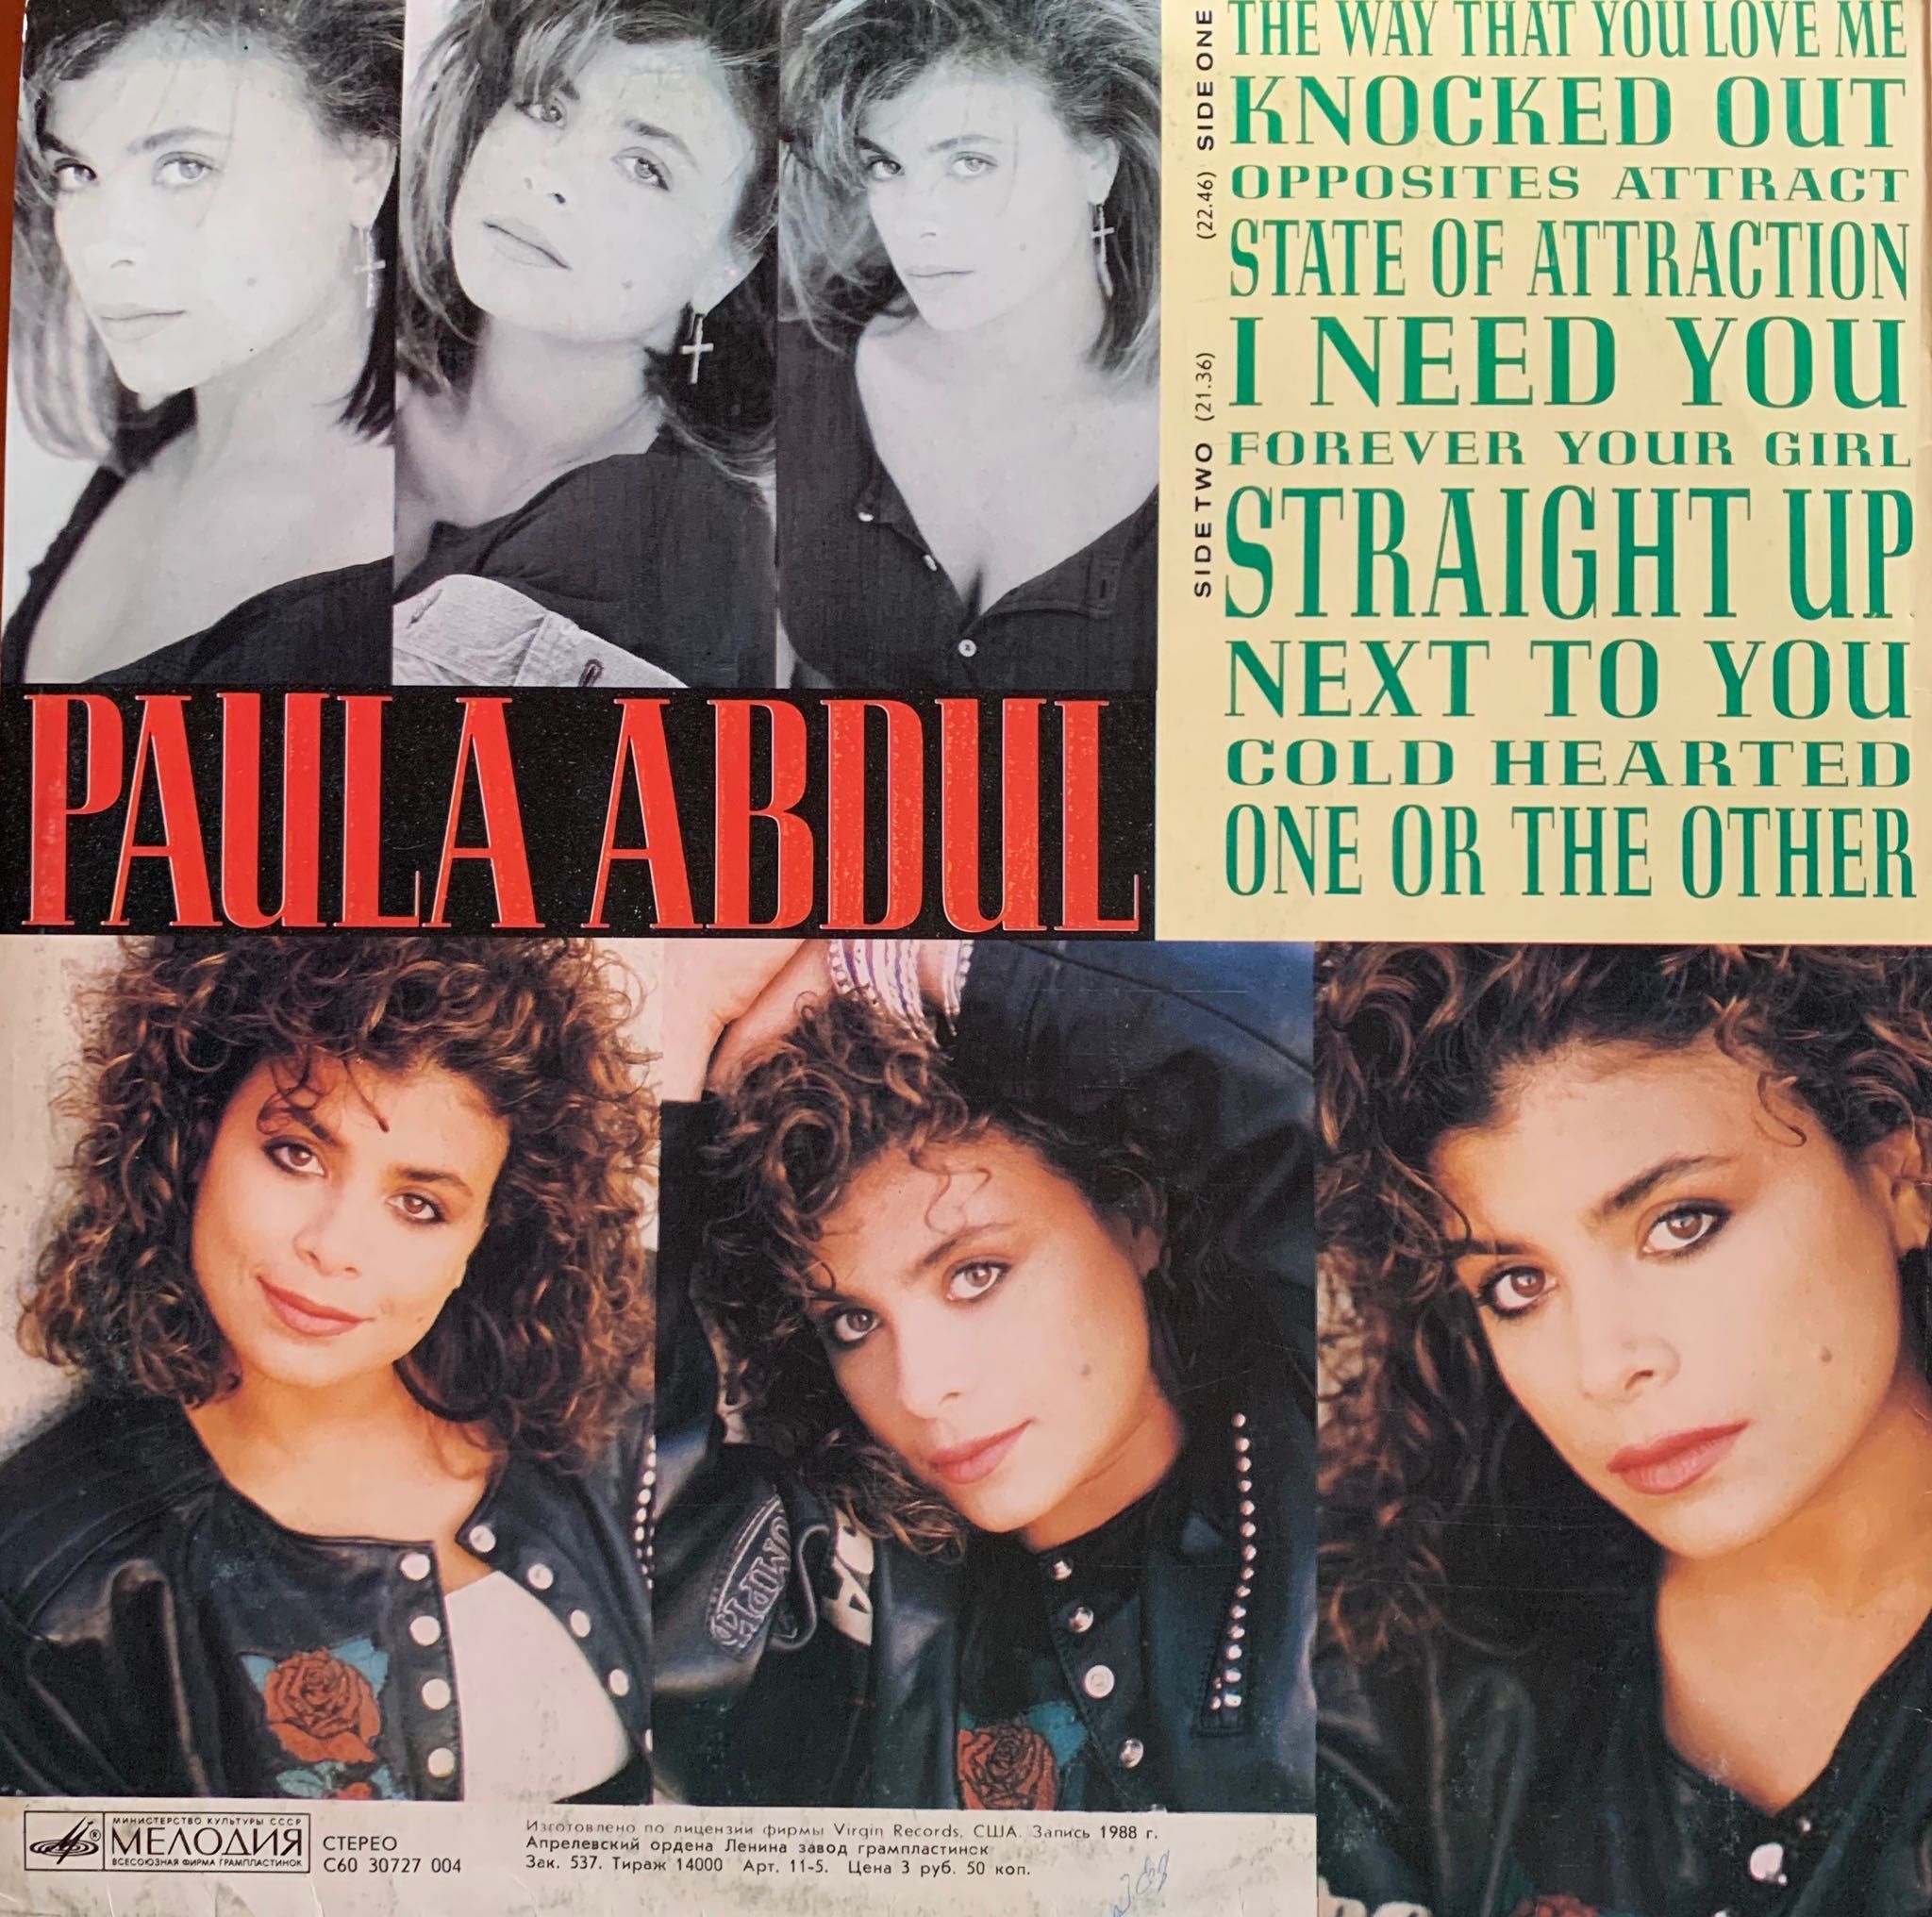 Платівка. Paula Abdul. “Your girl” 1988